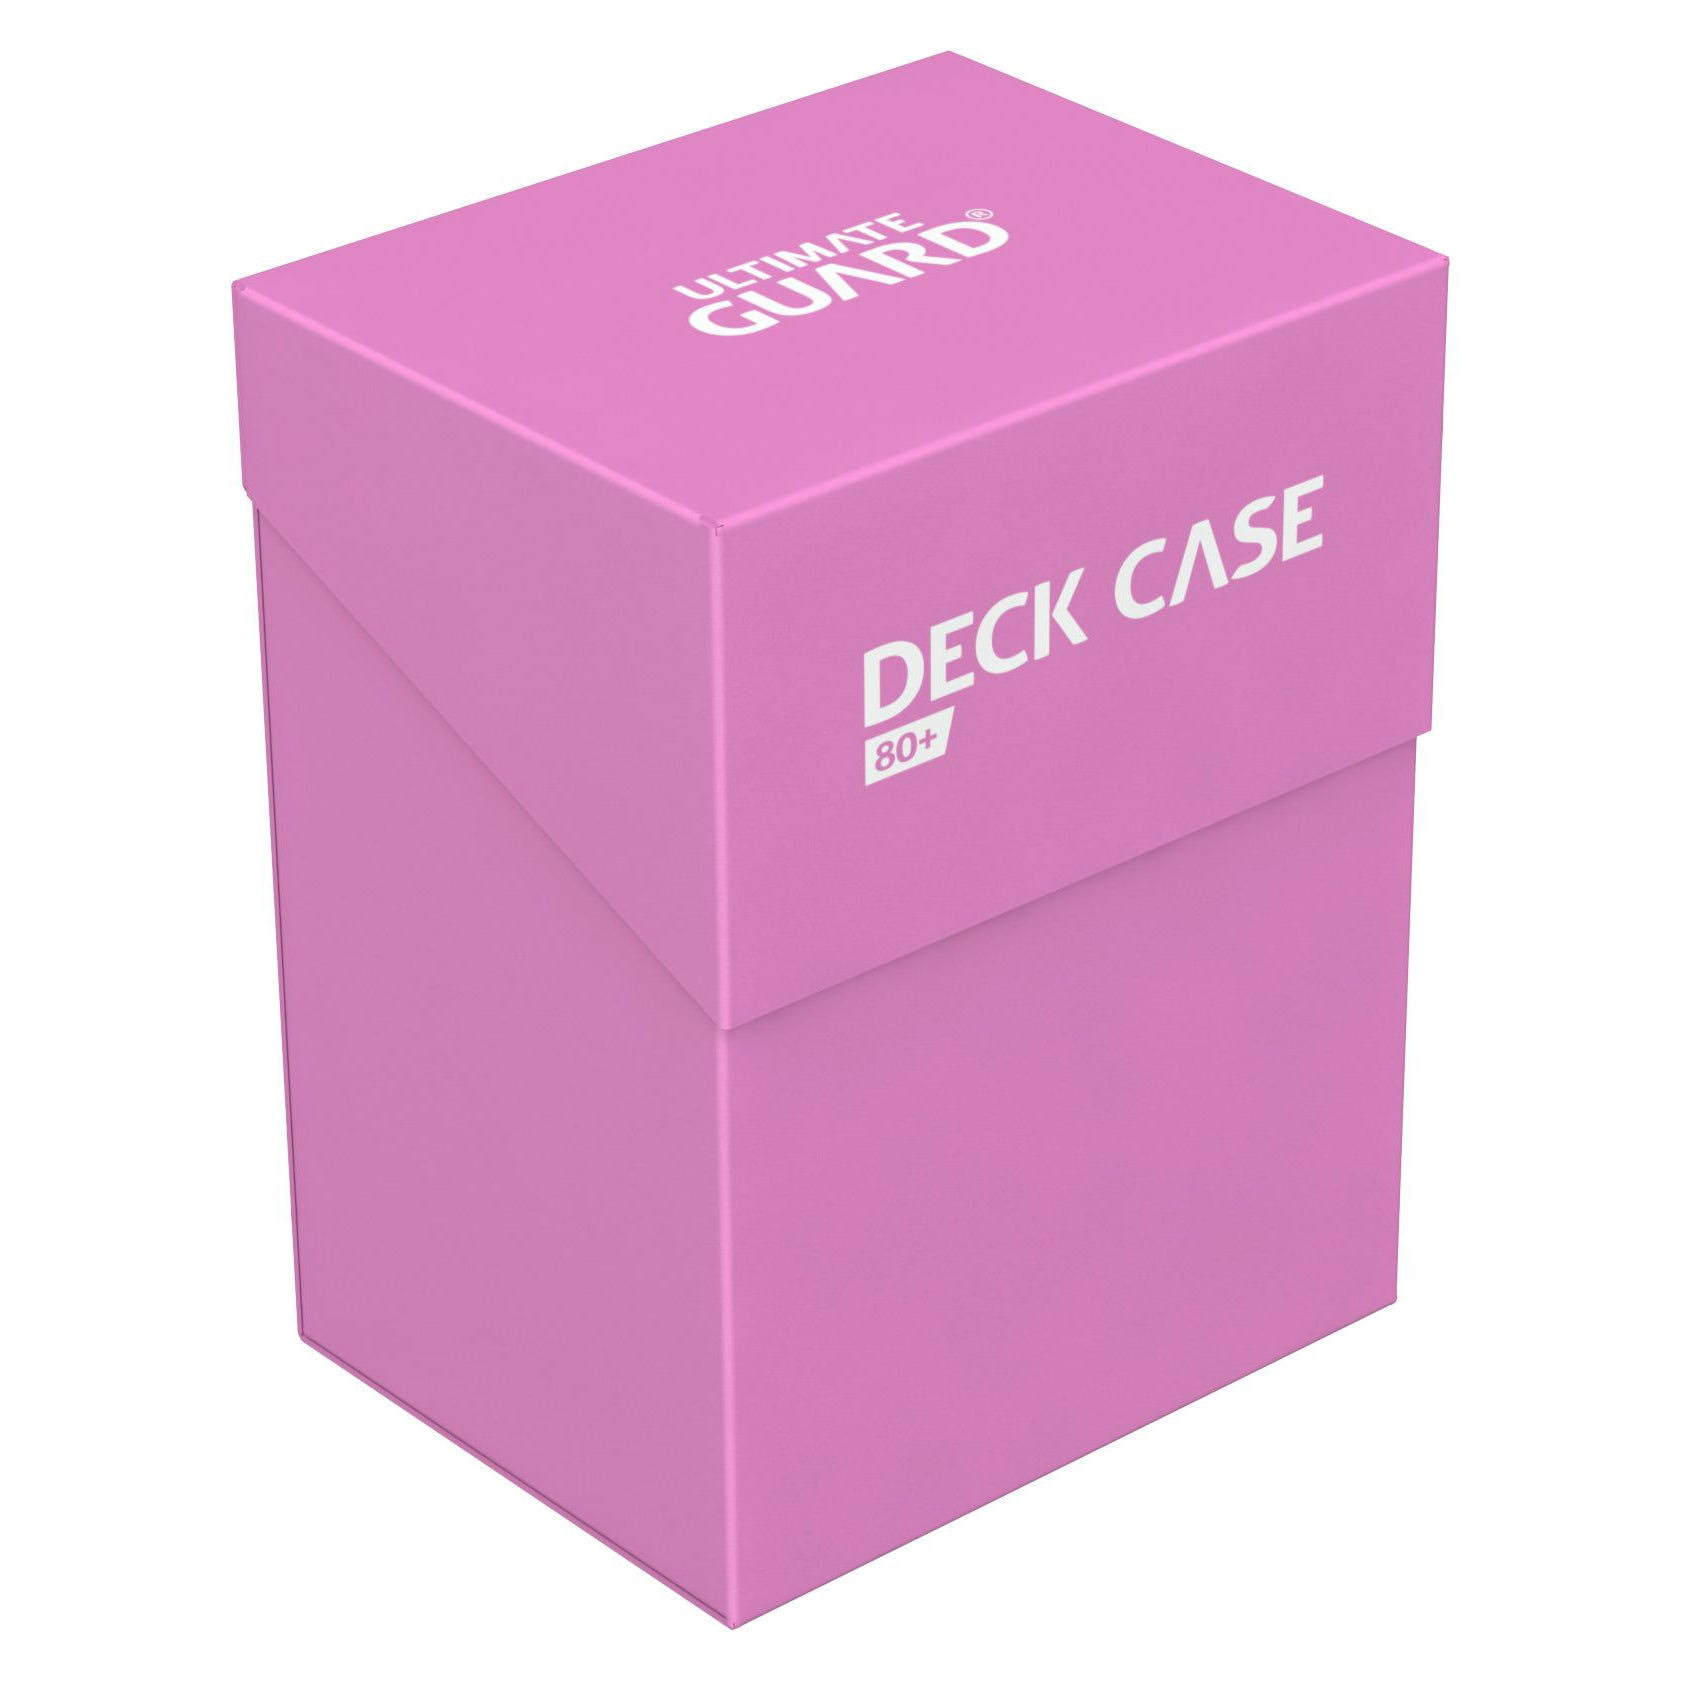 Ultimate Guard Card Deck Case - Pink